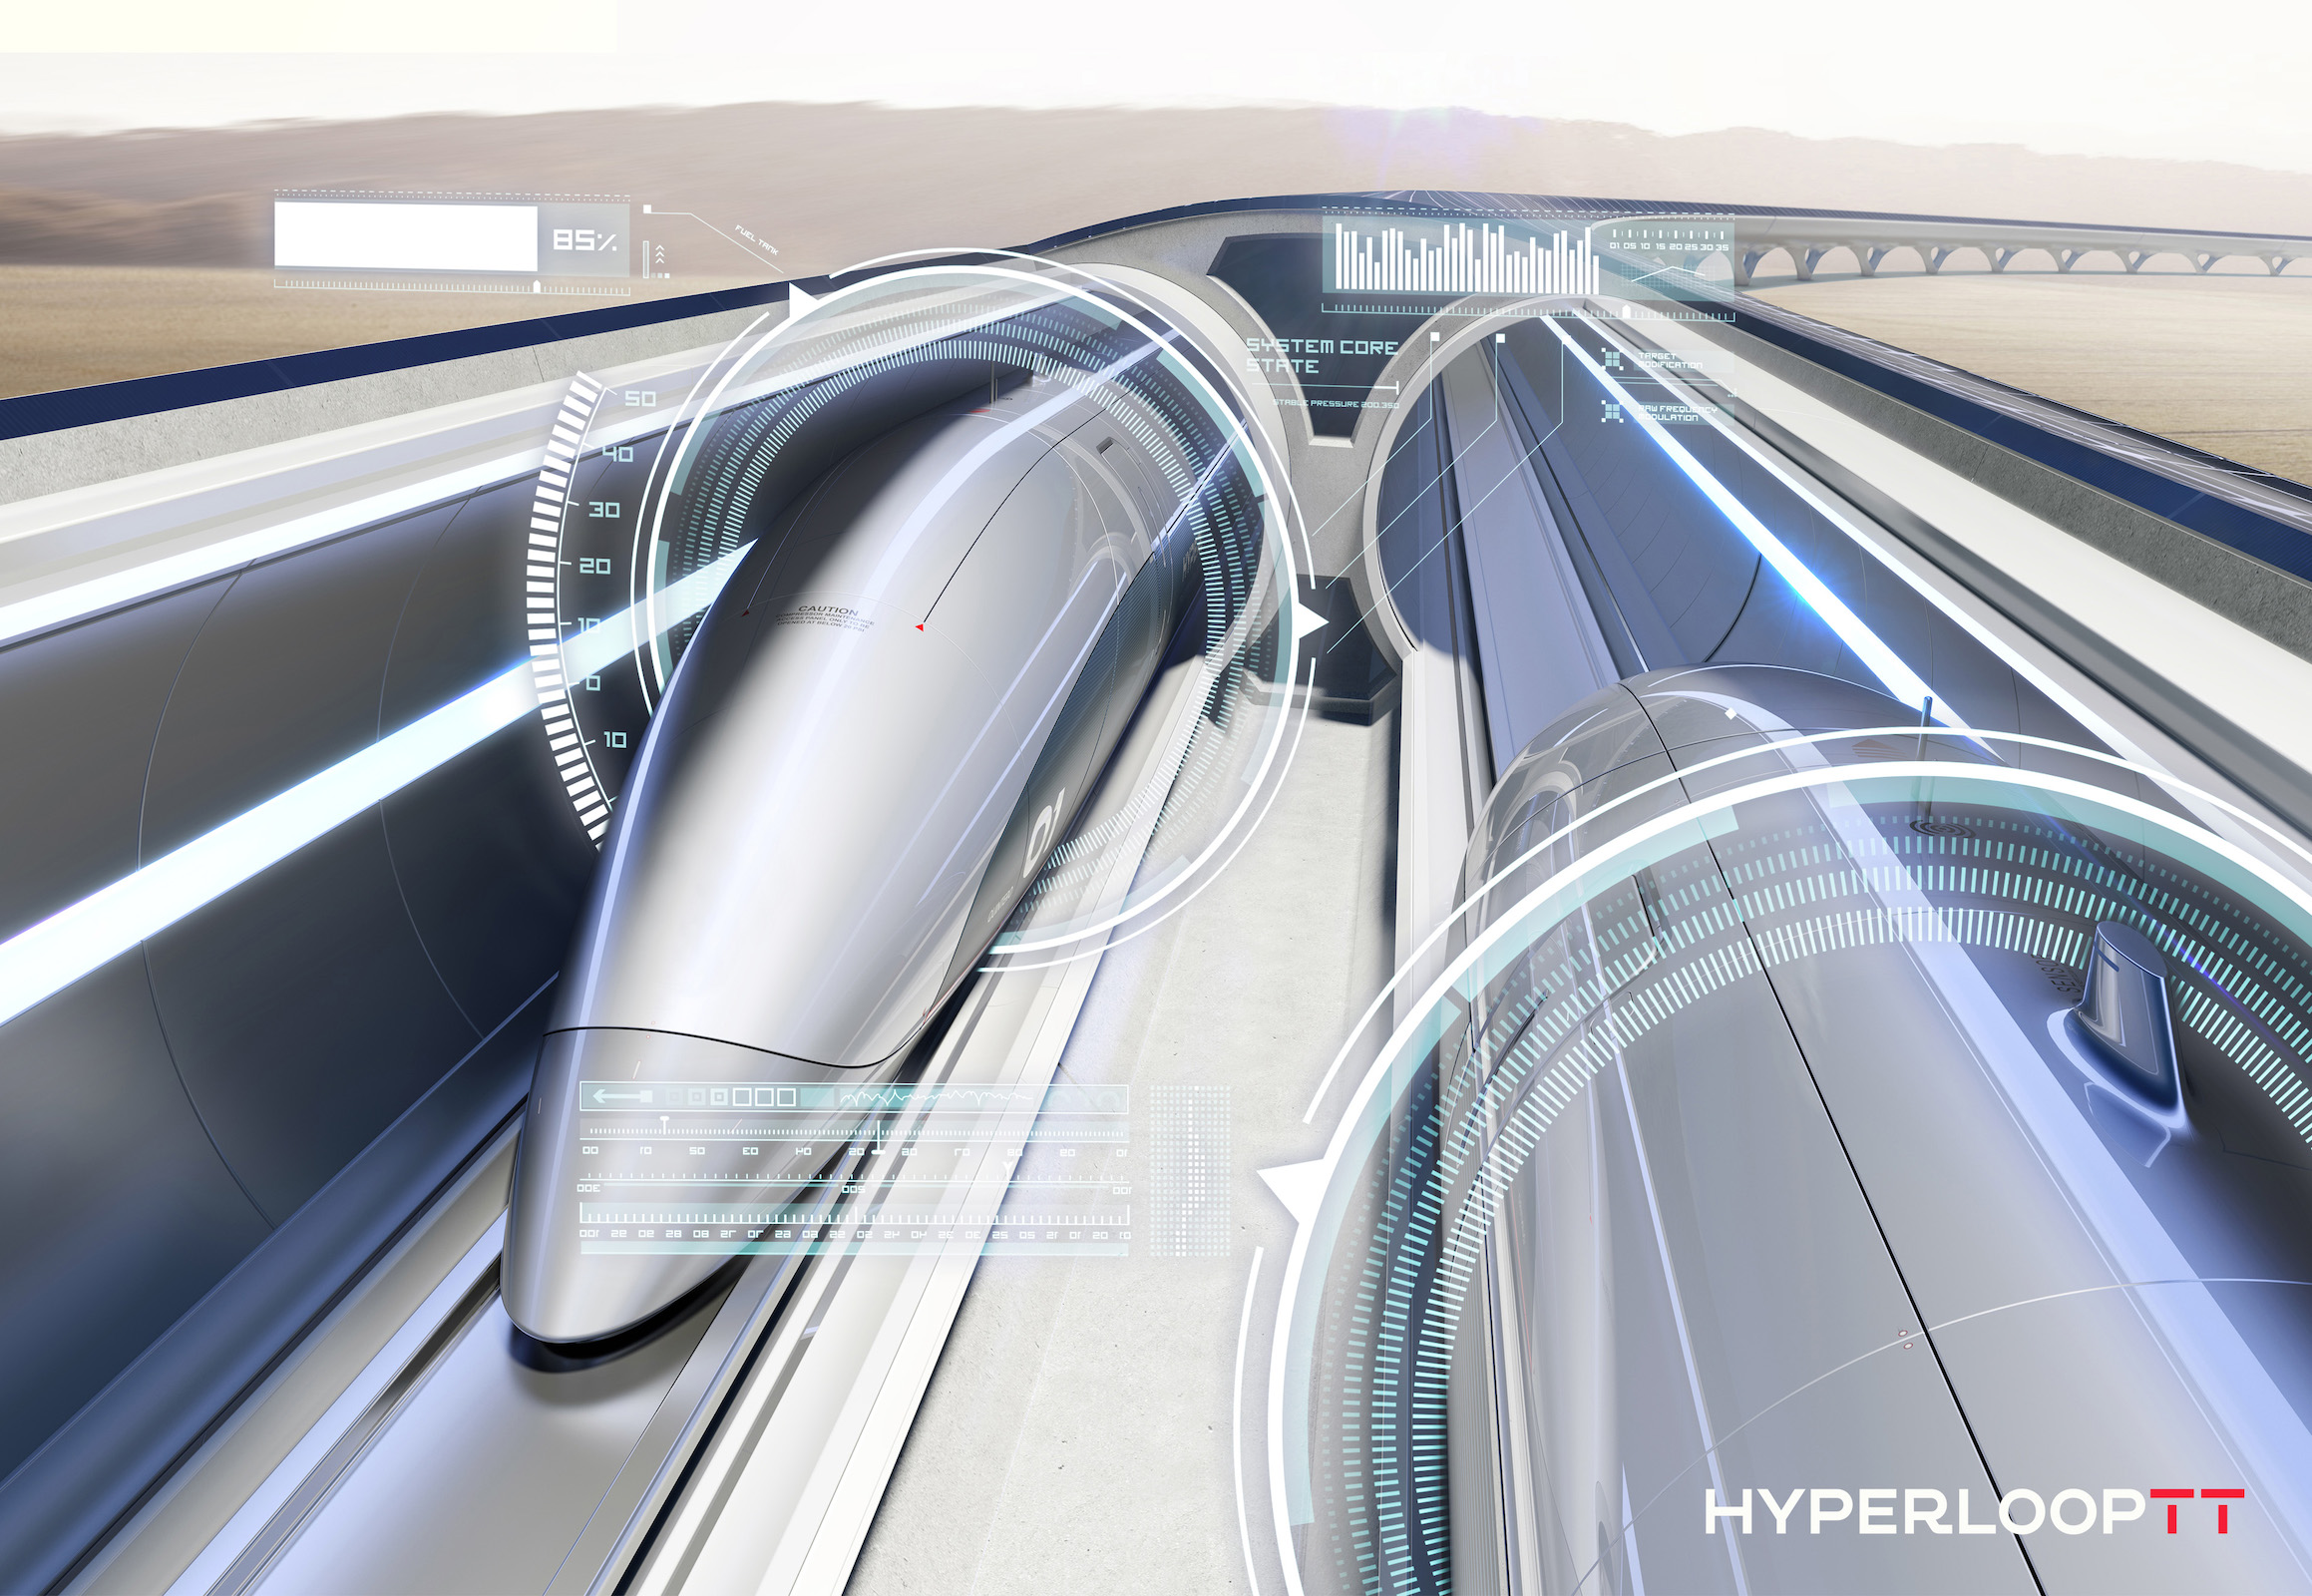 Digital rail signalling tested for hyperloop